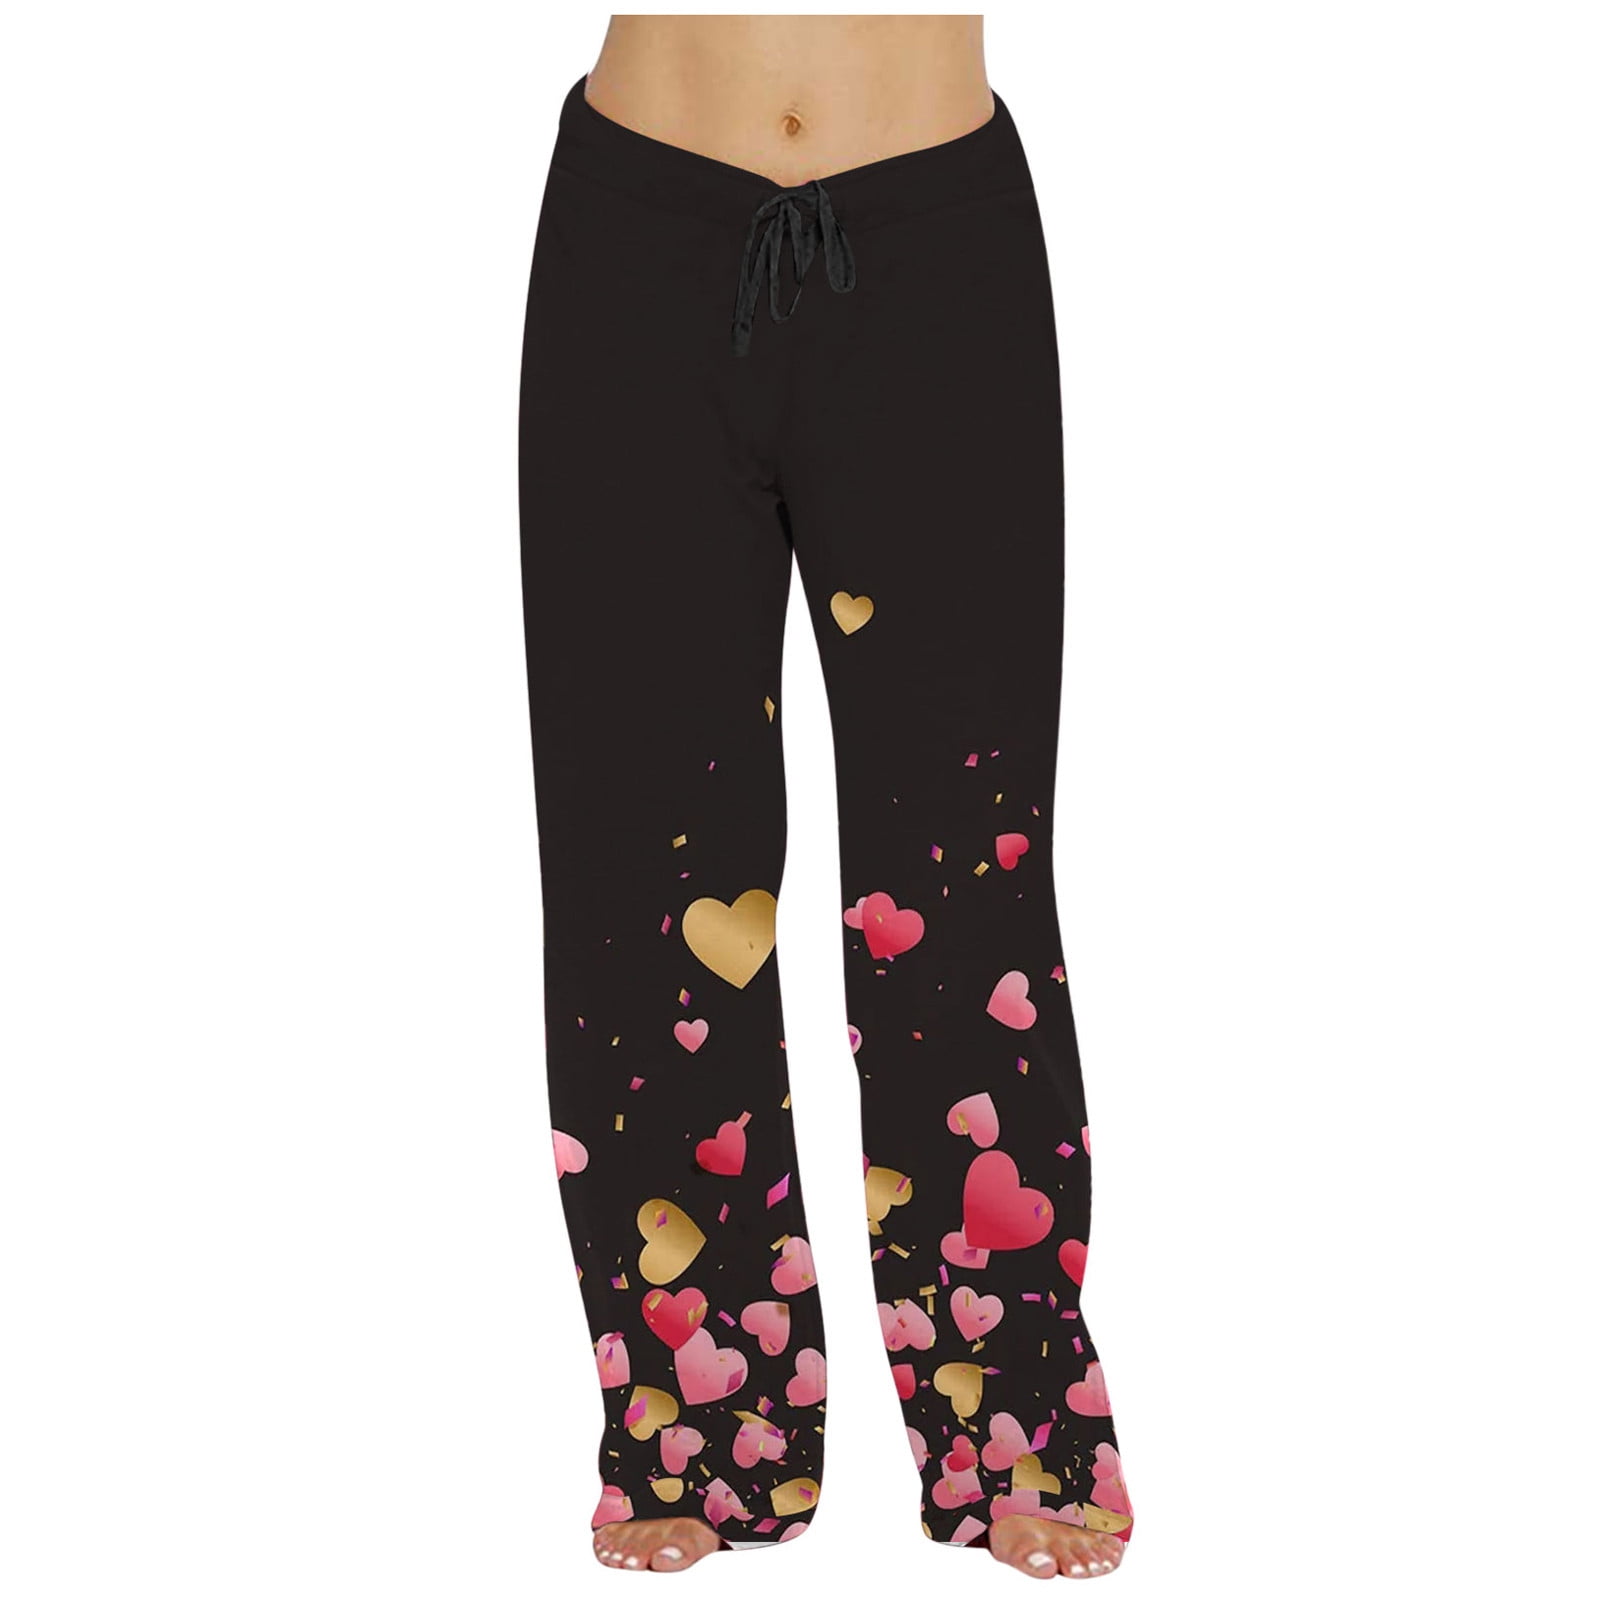 Fesfesfes Sweatpants for Women Floral Printed Casual Pants Elastic ...